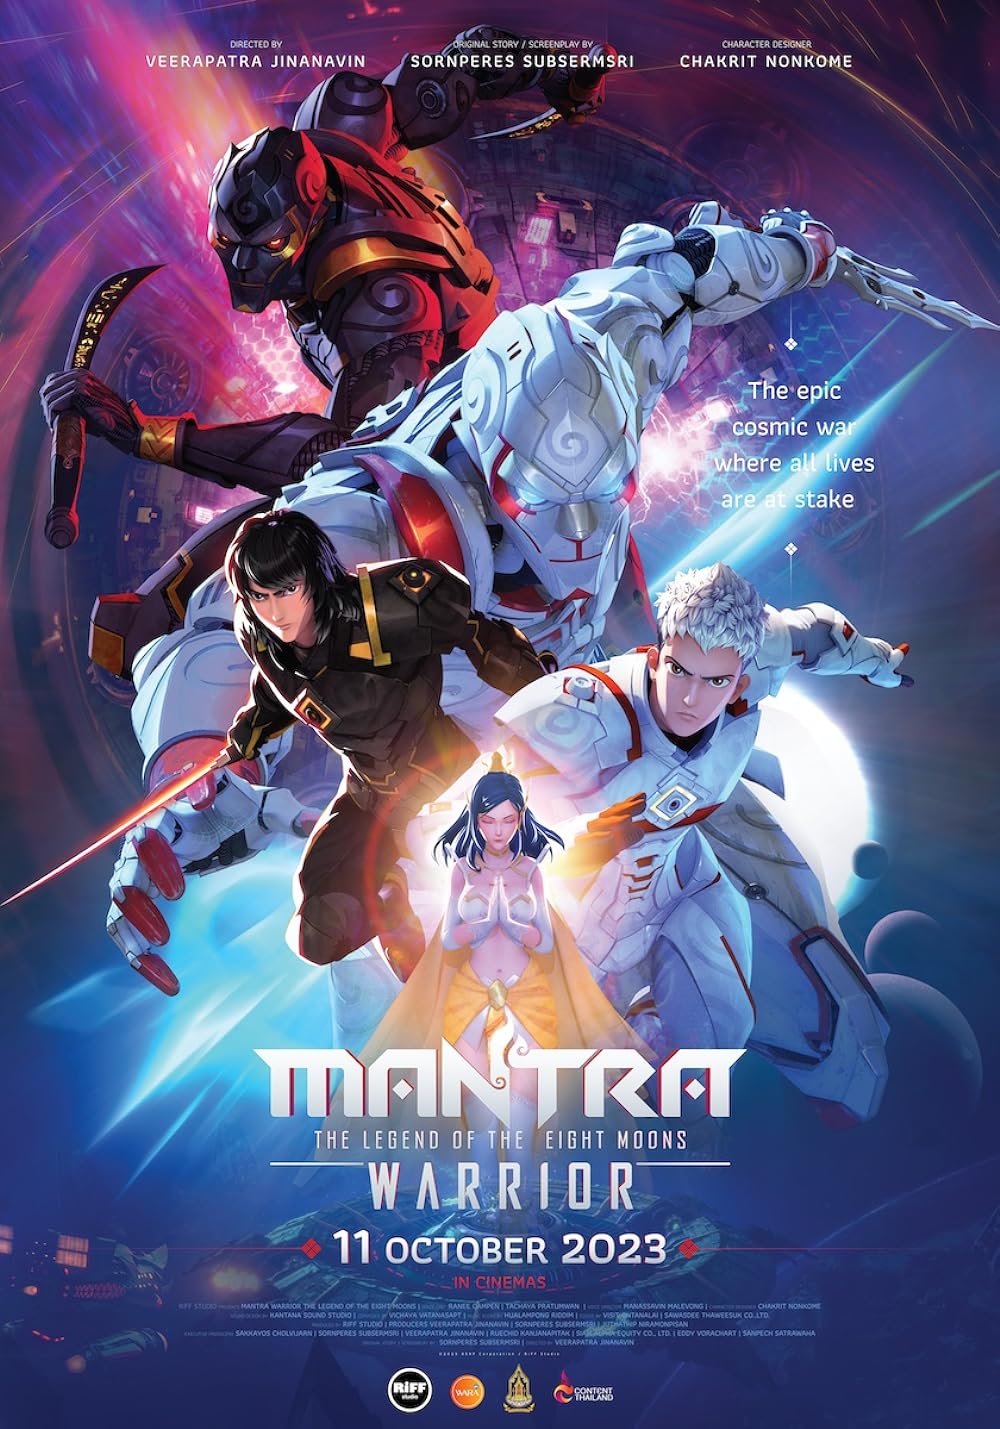 Mantra Warrior The Legend of the Eight Moons นักรบมนตรา ตำนานแปดดวงจันทร์ พากย์ไทย